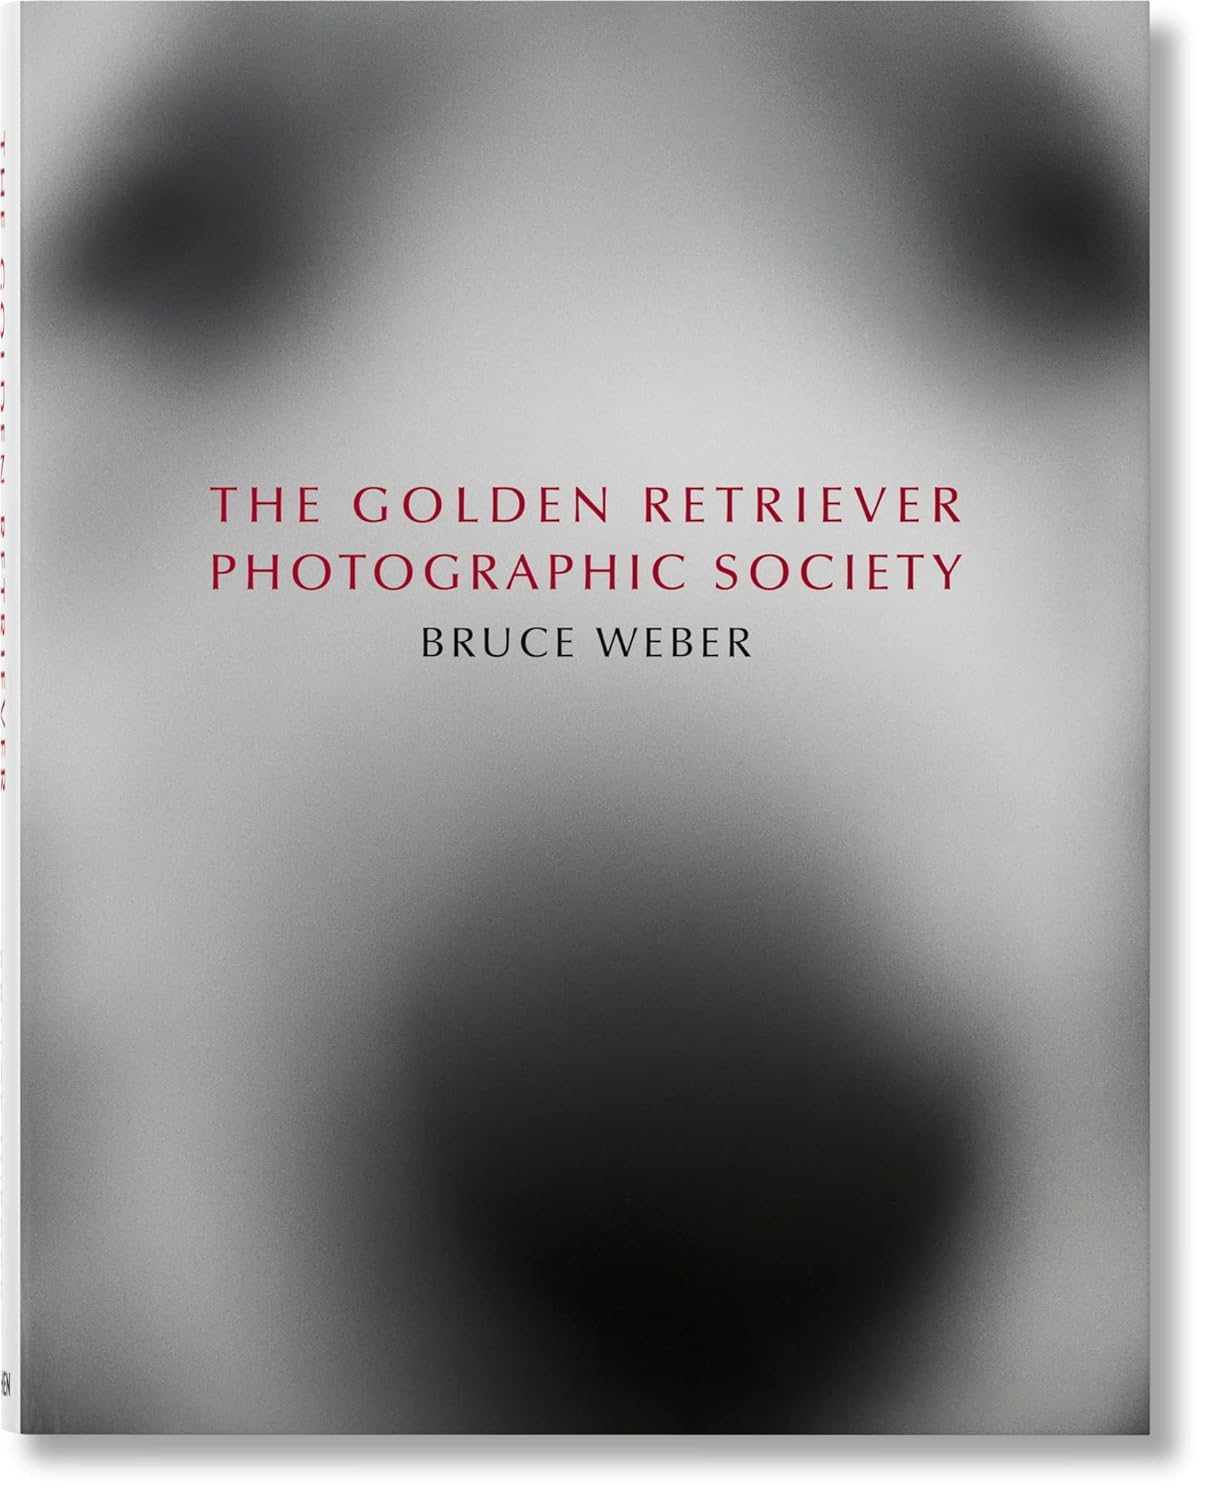 THE GOLDEN RETRIEVER PHOTOGRAPHIC SOCIETY